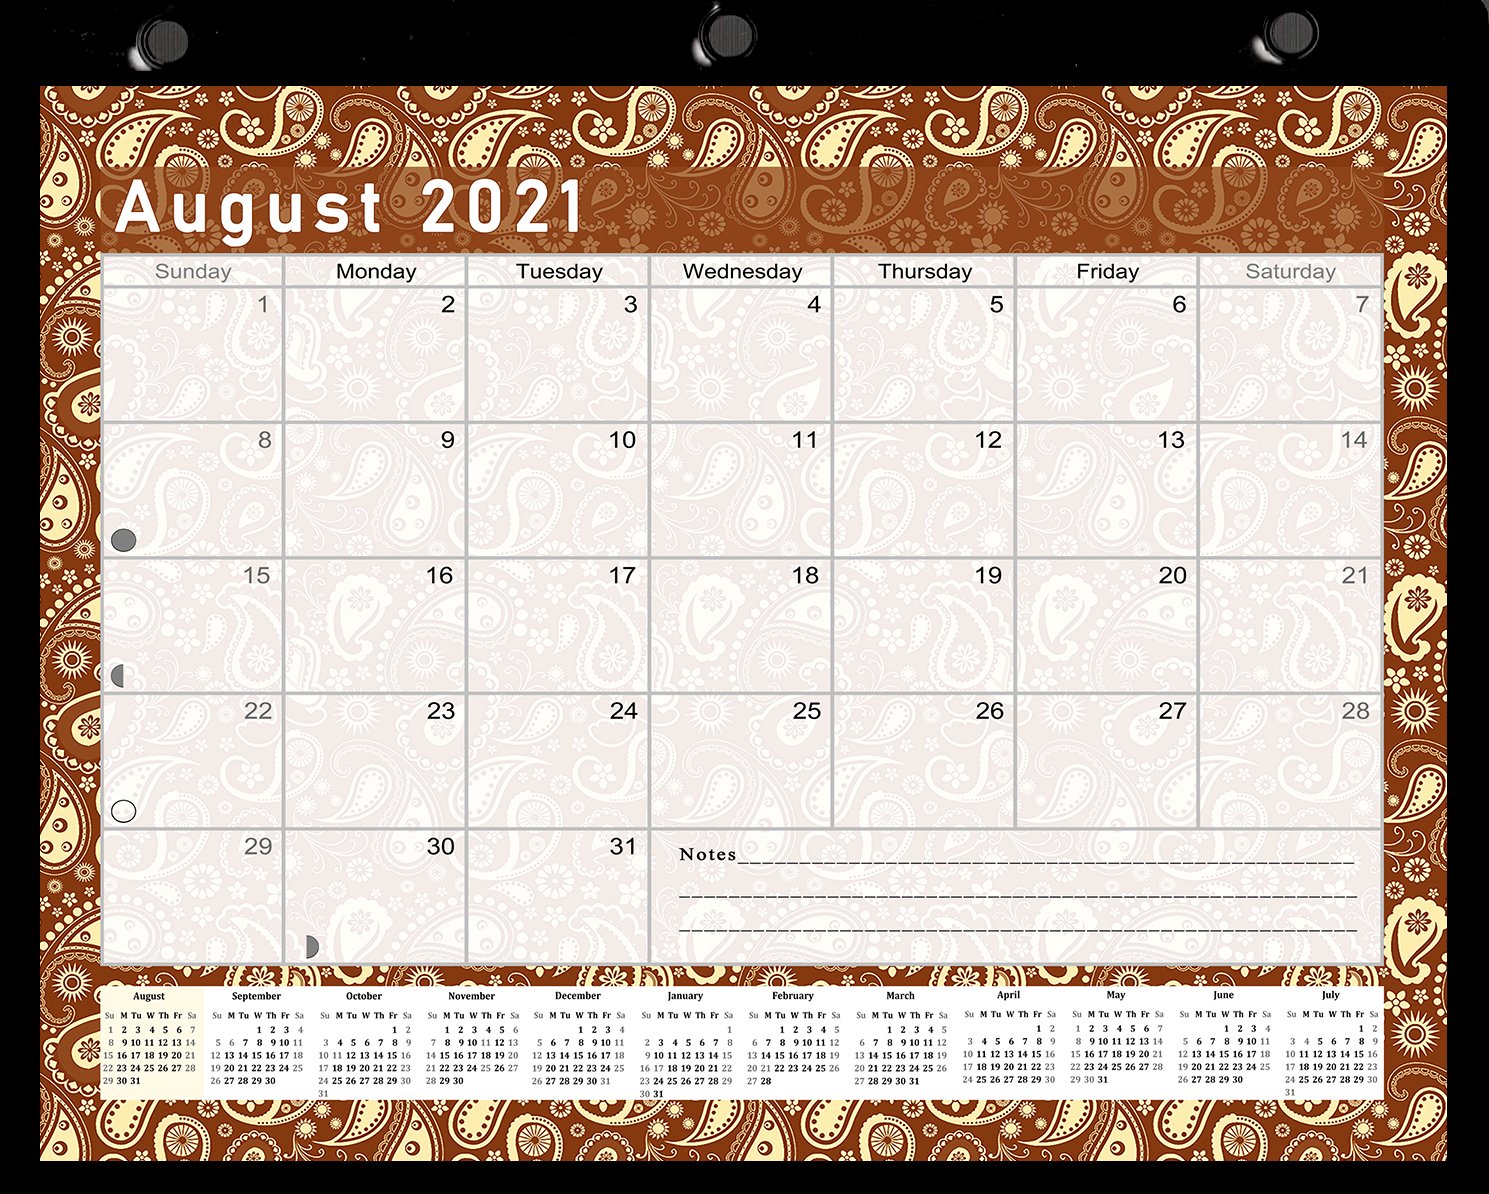 2021-2022 Academic Year 12 Months Student Calendar/Planner -v017 (Brown